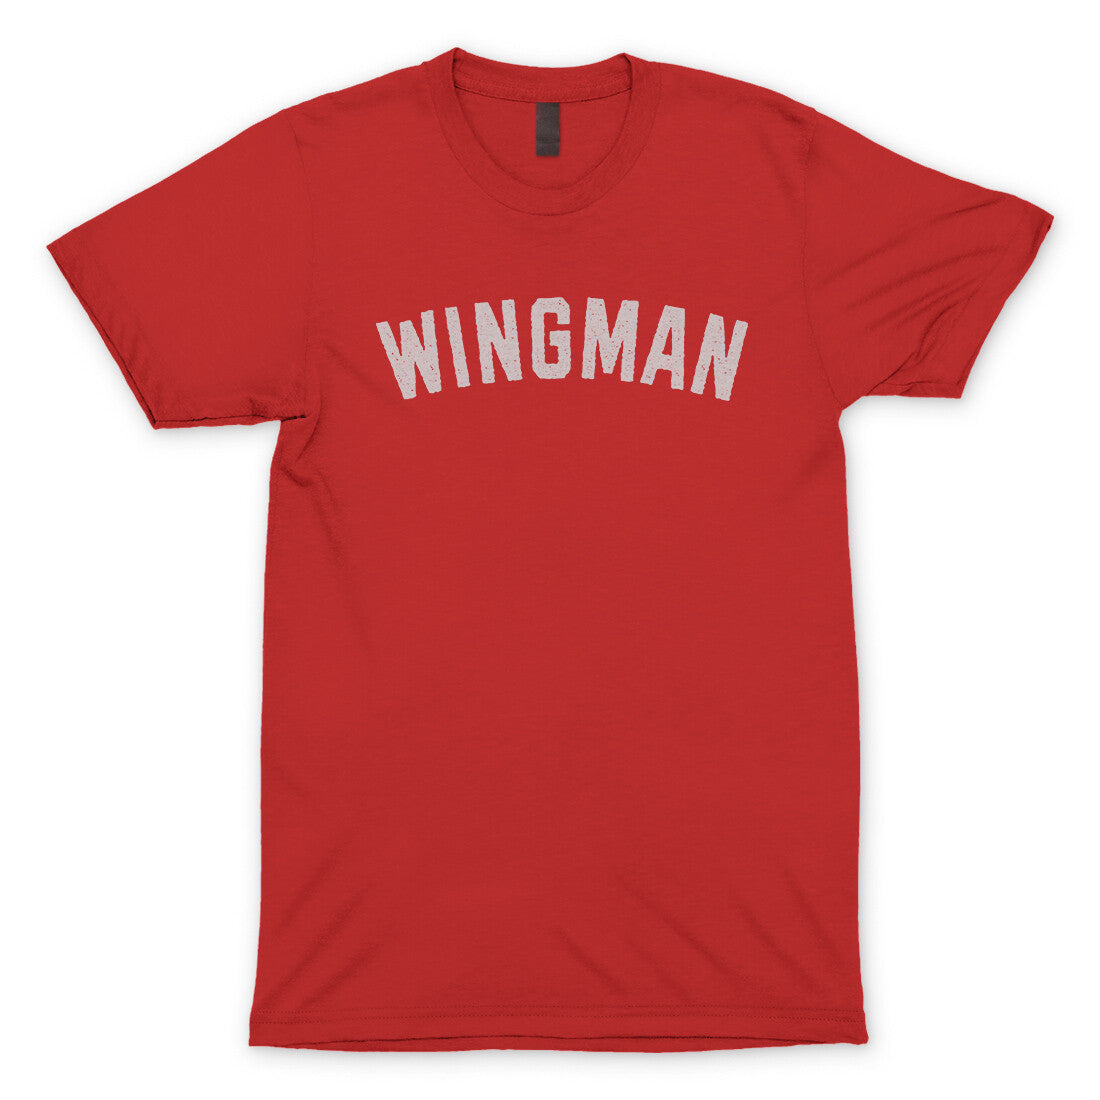 Wingman in Red Color